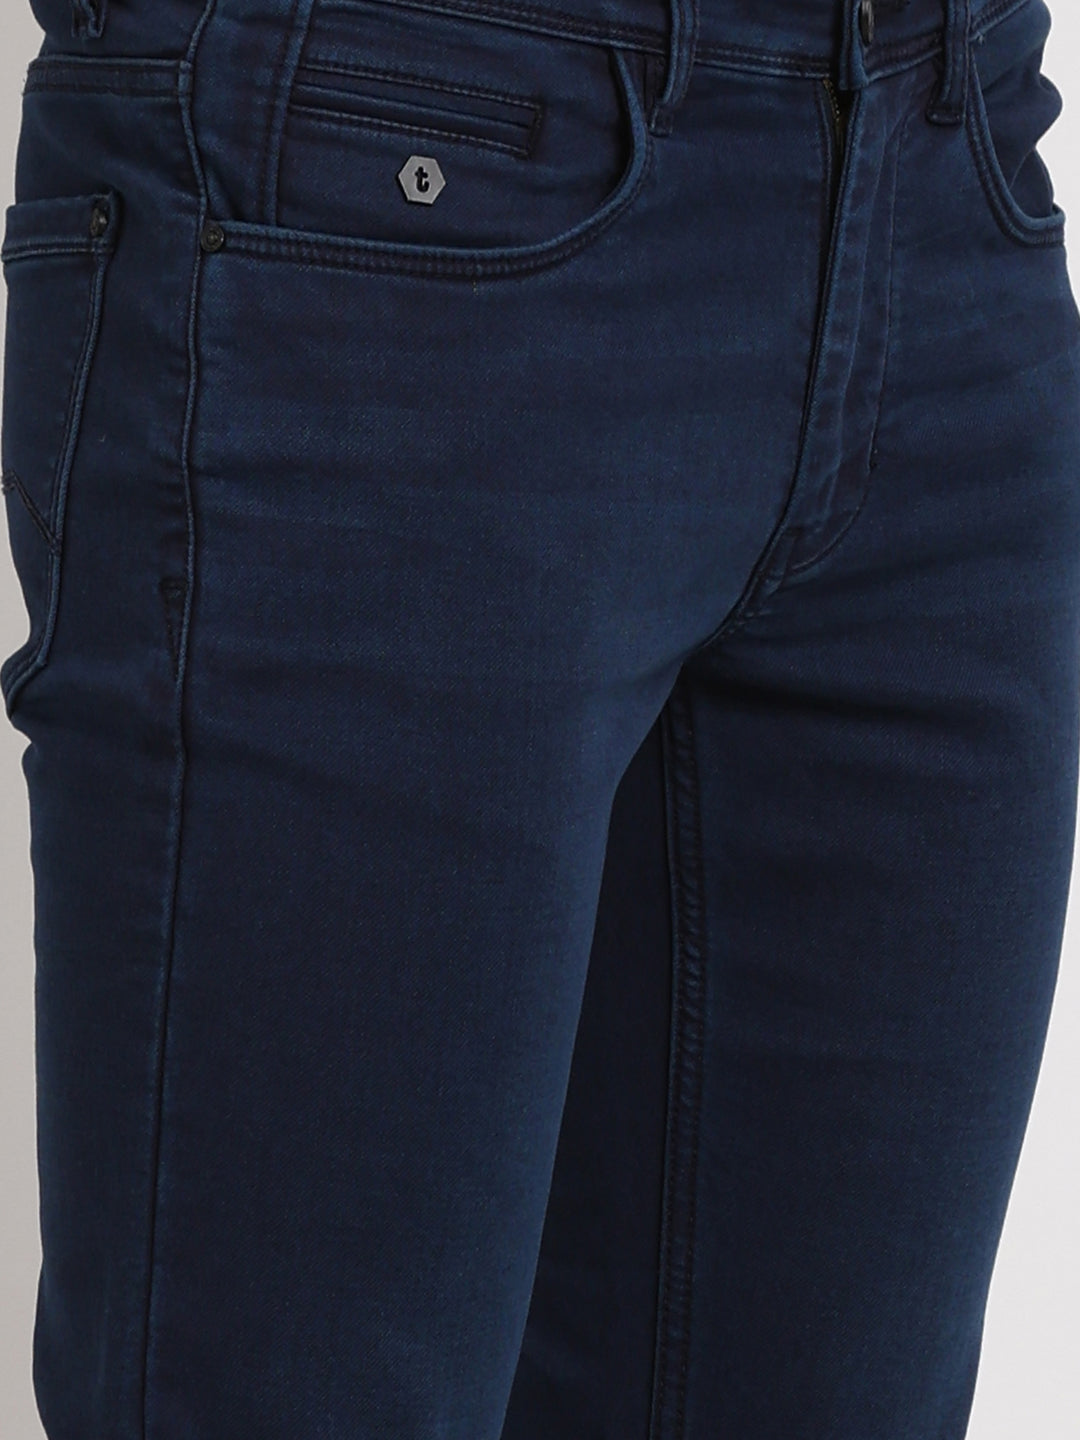 Cotton Stretch Indigo Blue Plain Narrow Fit Flat Front Casual Jeans